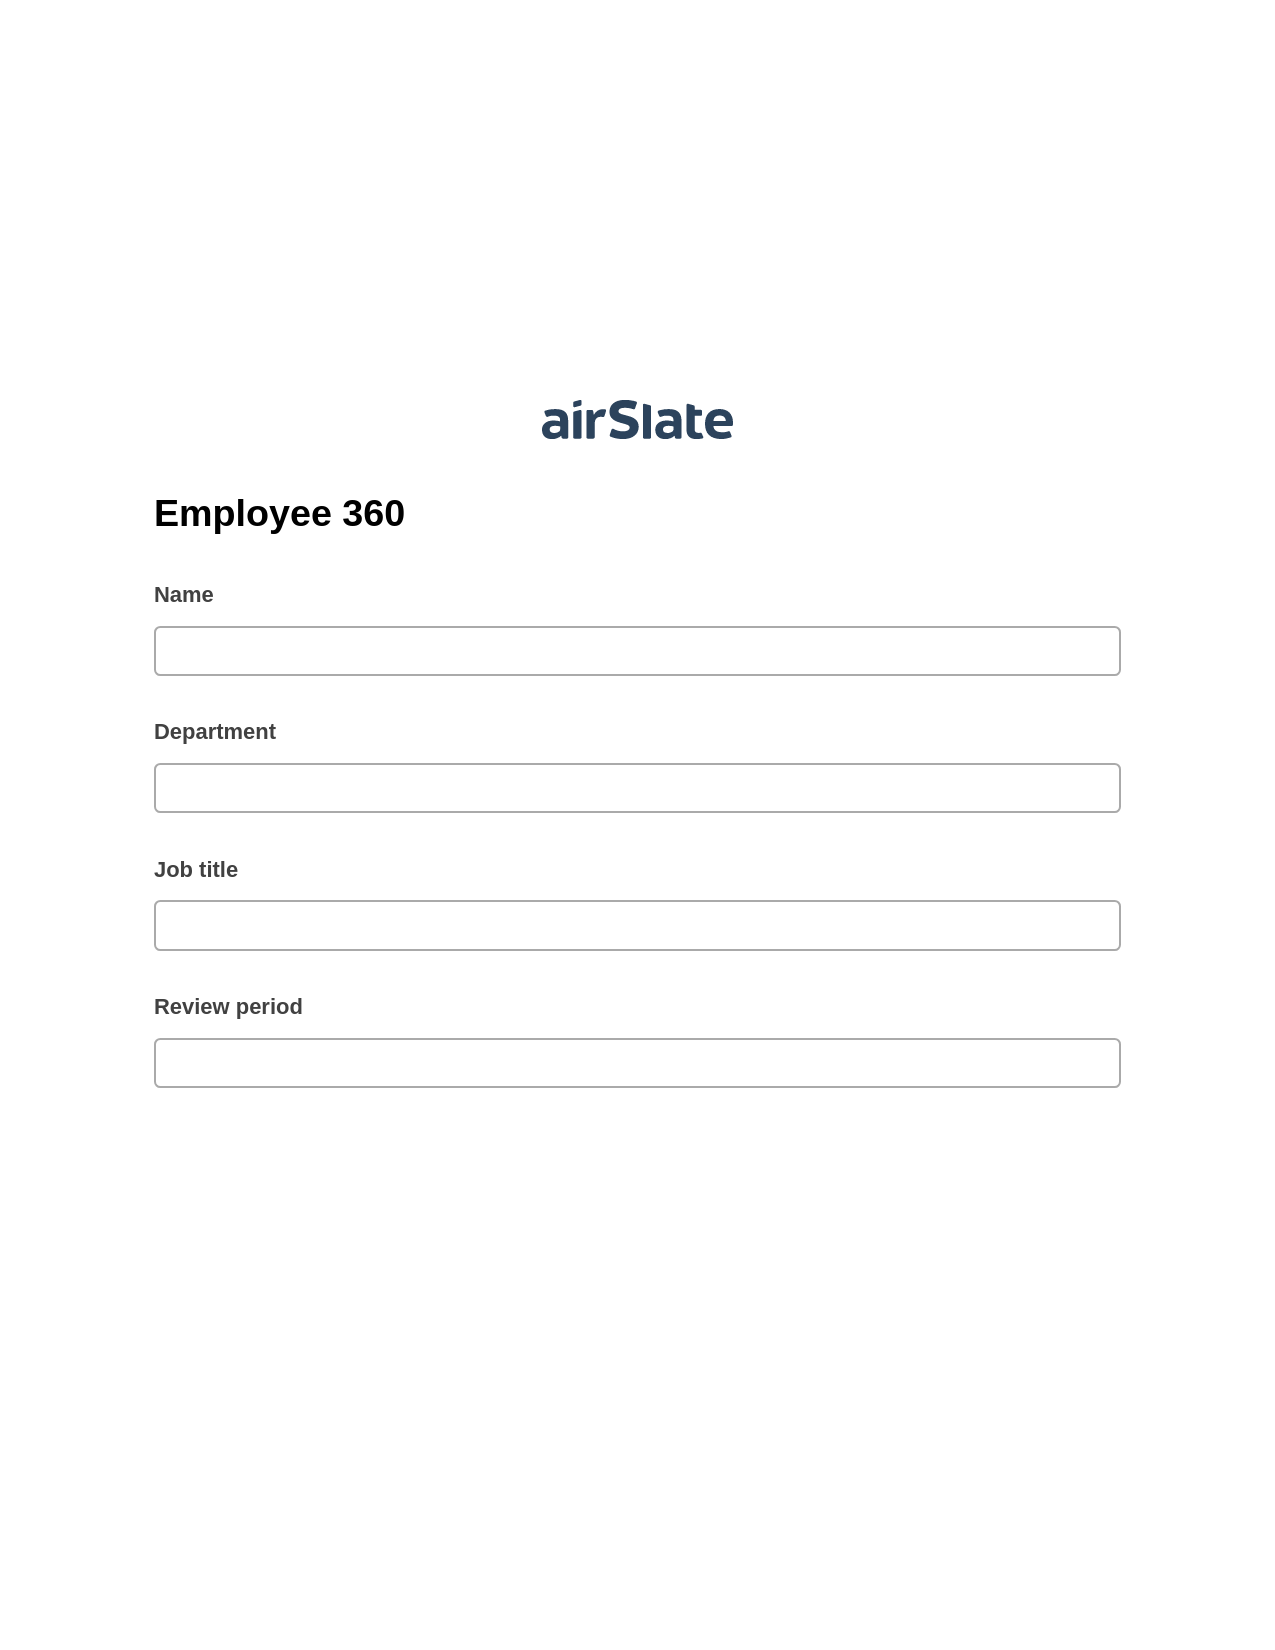 Employee 360 Pre-fill from MS Dynamics 365 Records, Invoke Salesforce Process Bot, Slack Notification Postfinish Bot